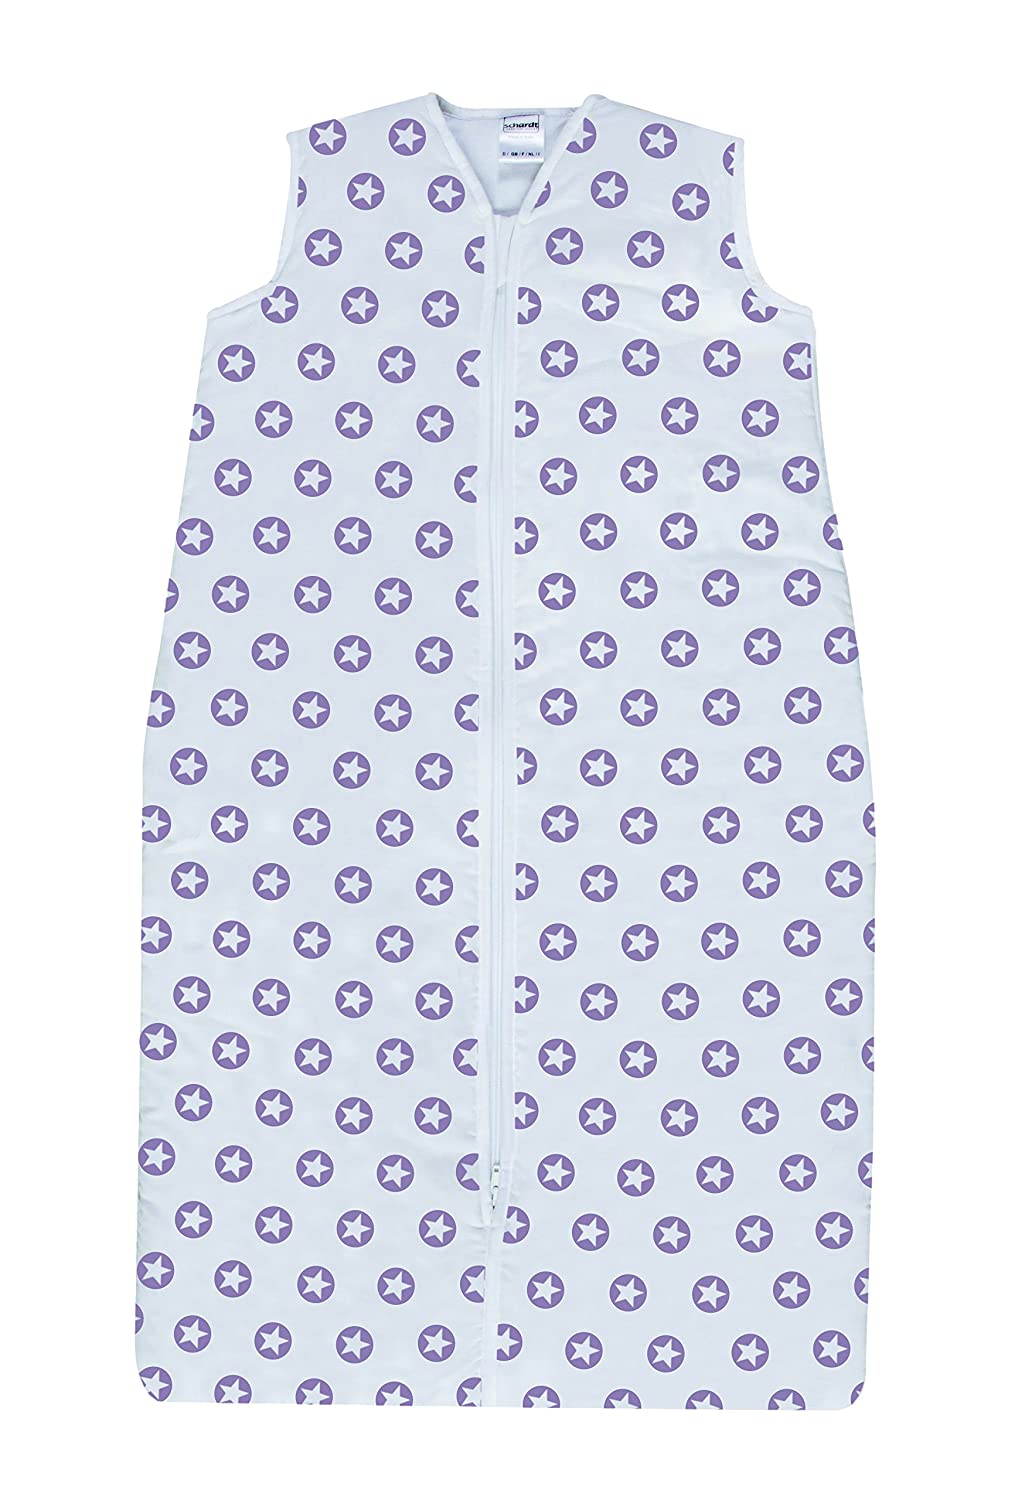 Schardt 13 342 1 x 762 Circle Star, 70 x 90 cm Sleeping Bag – Purple